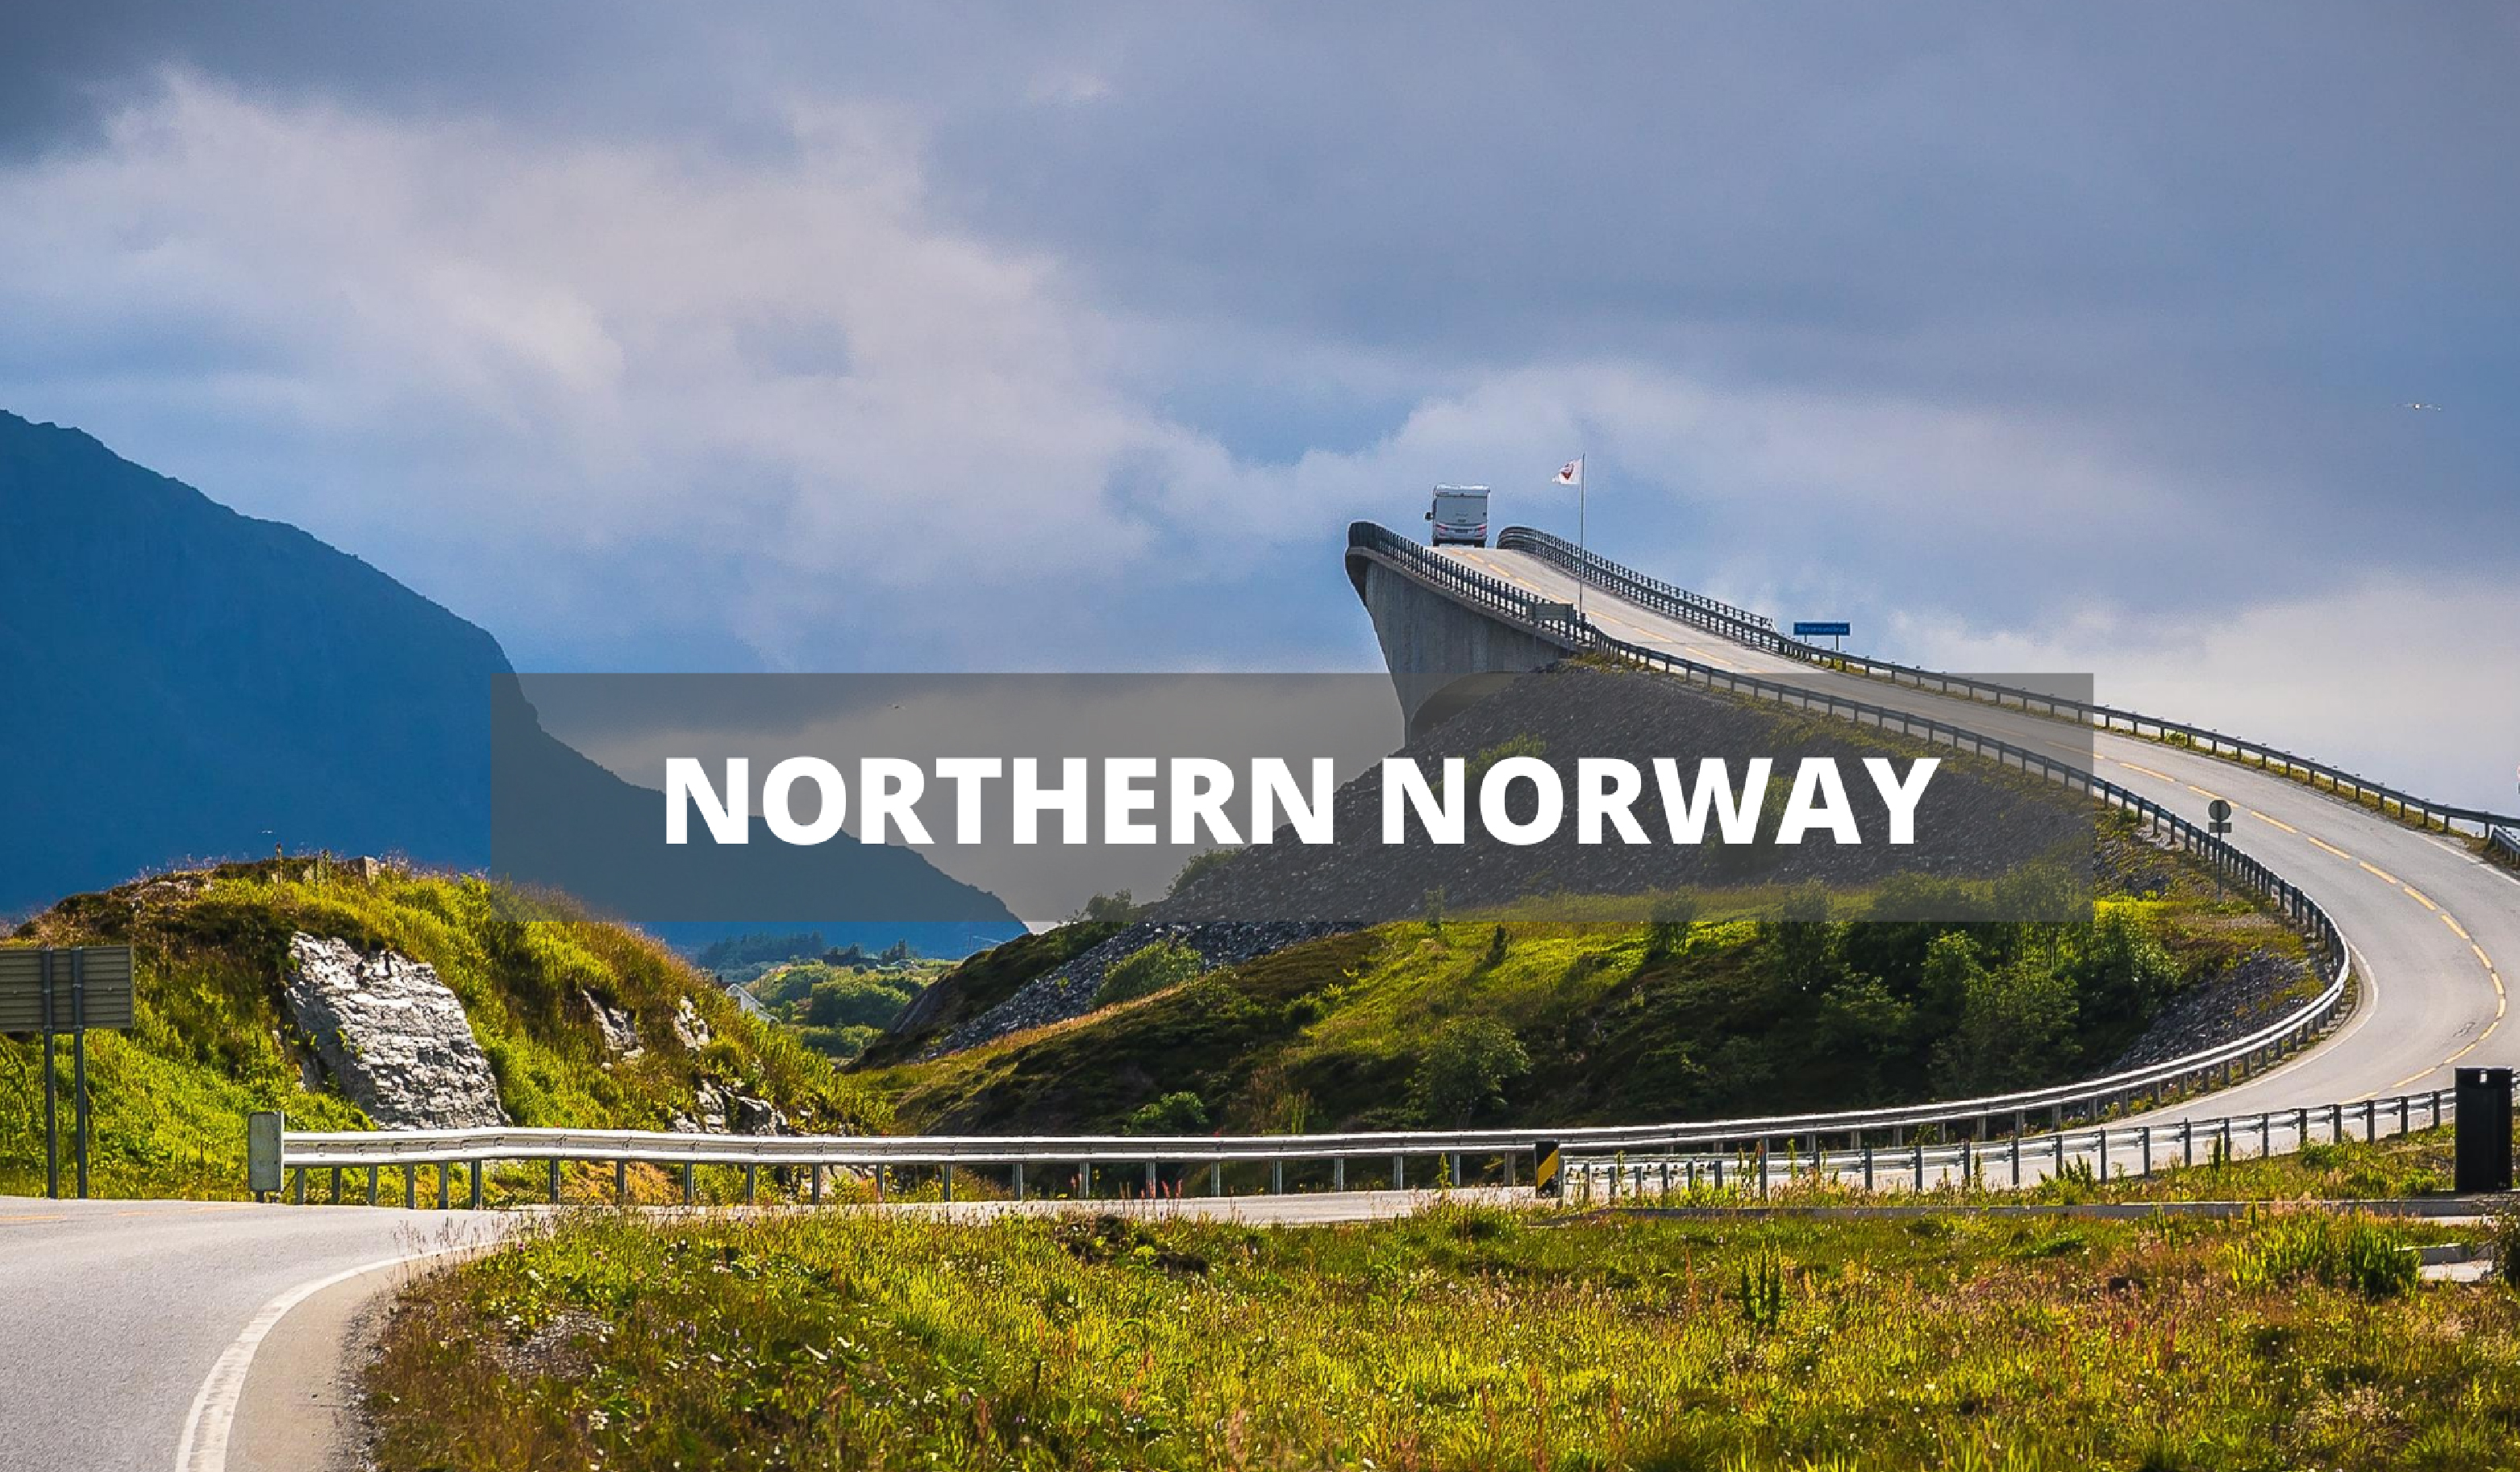 NORTHERN NORWAY